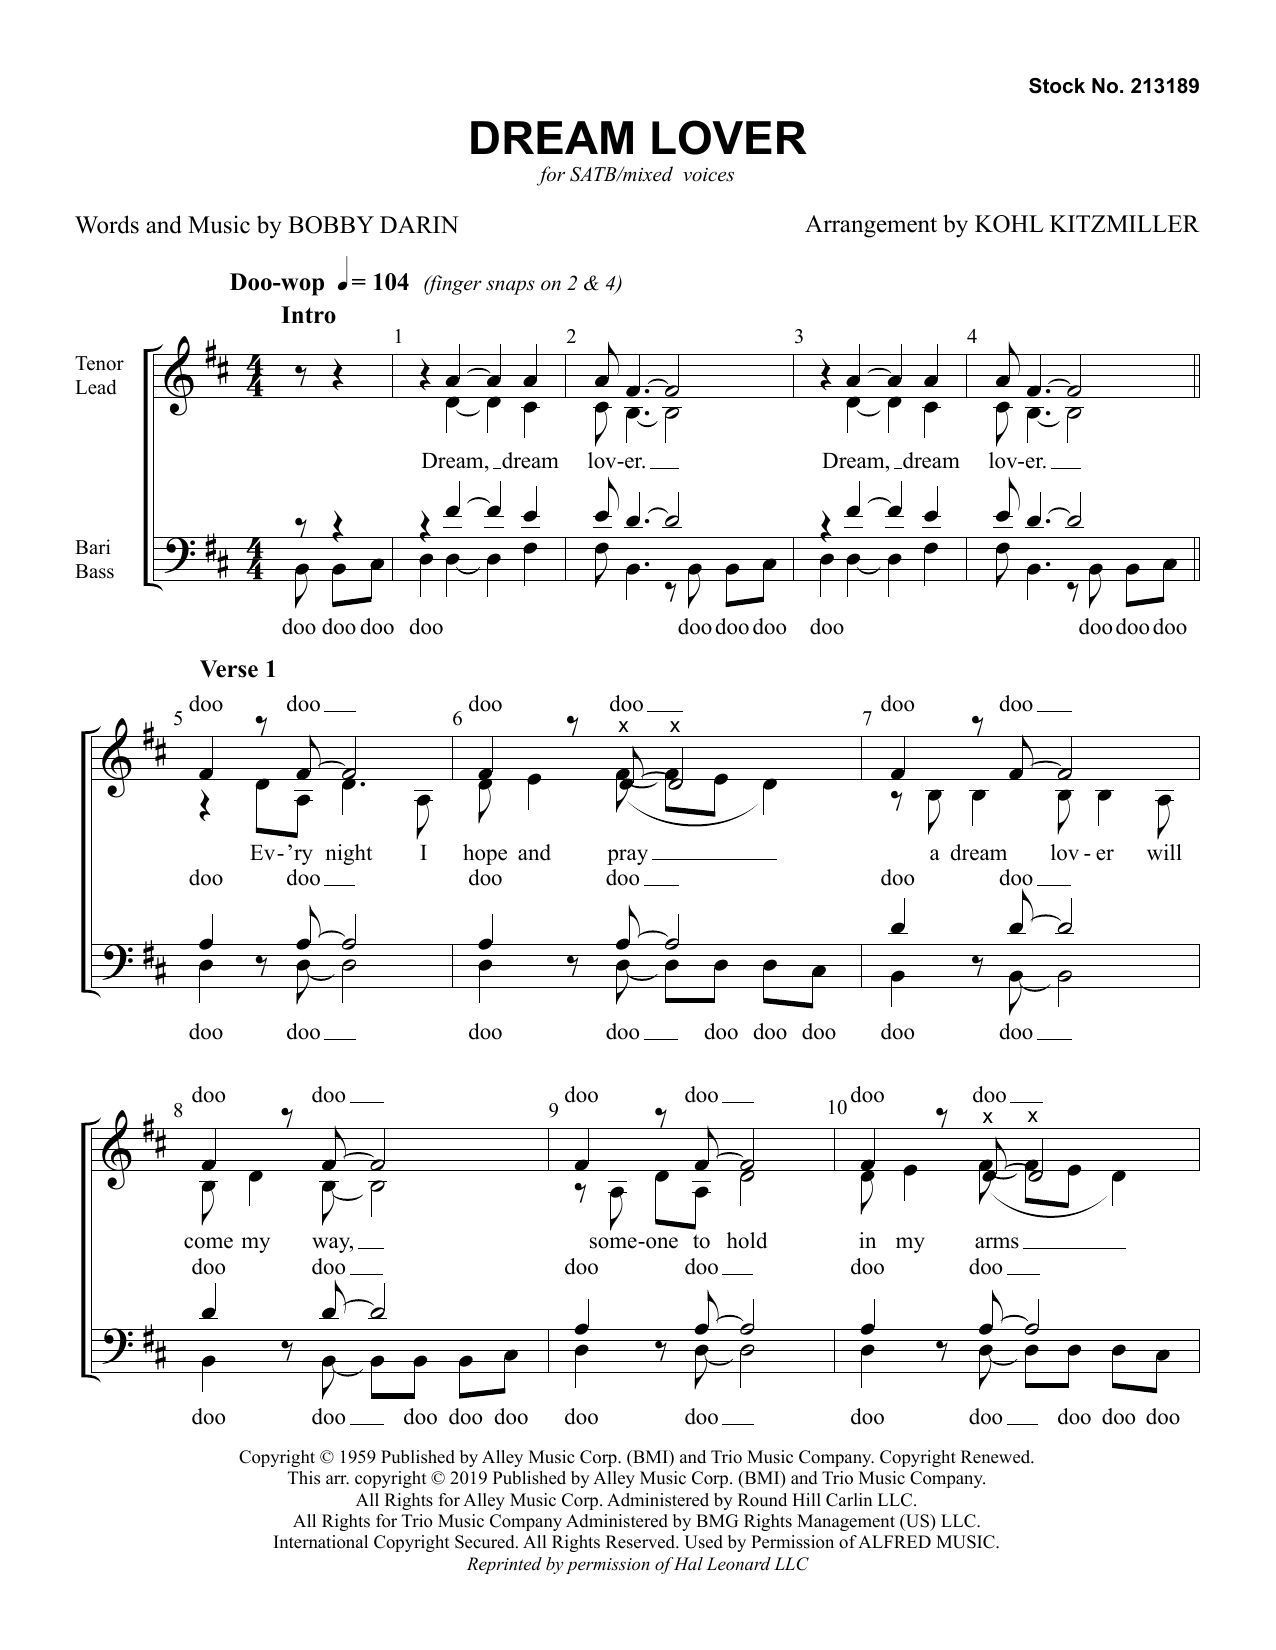 The Manhattan Transfer Dream Lover (arr. Kohl Kitzmiller) Sheet Music Notes & Chords for SATB Choir - Download or Print PDF